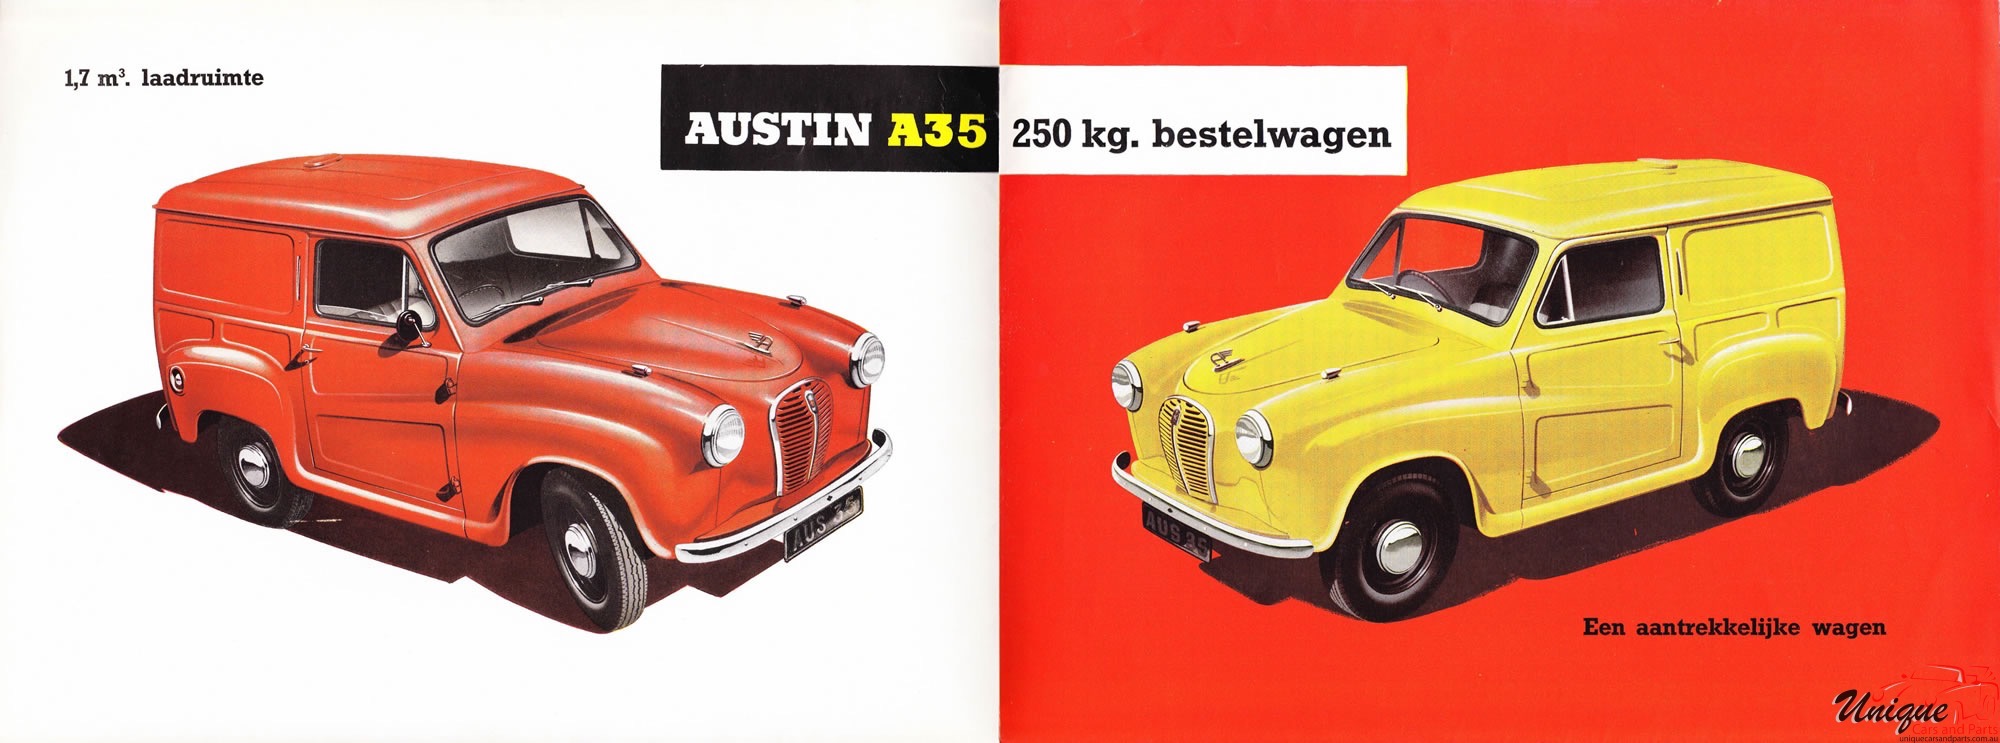 1959 Austin A35 Van Brochure Page 1